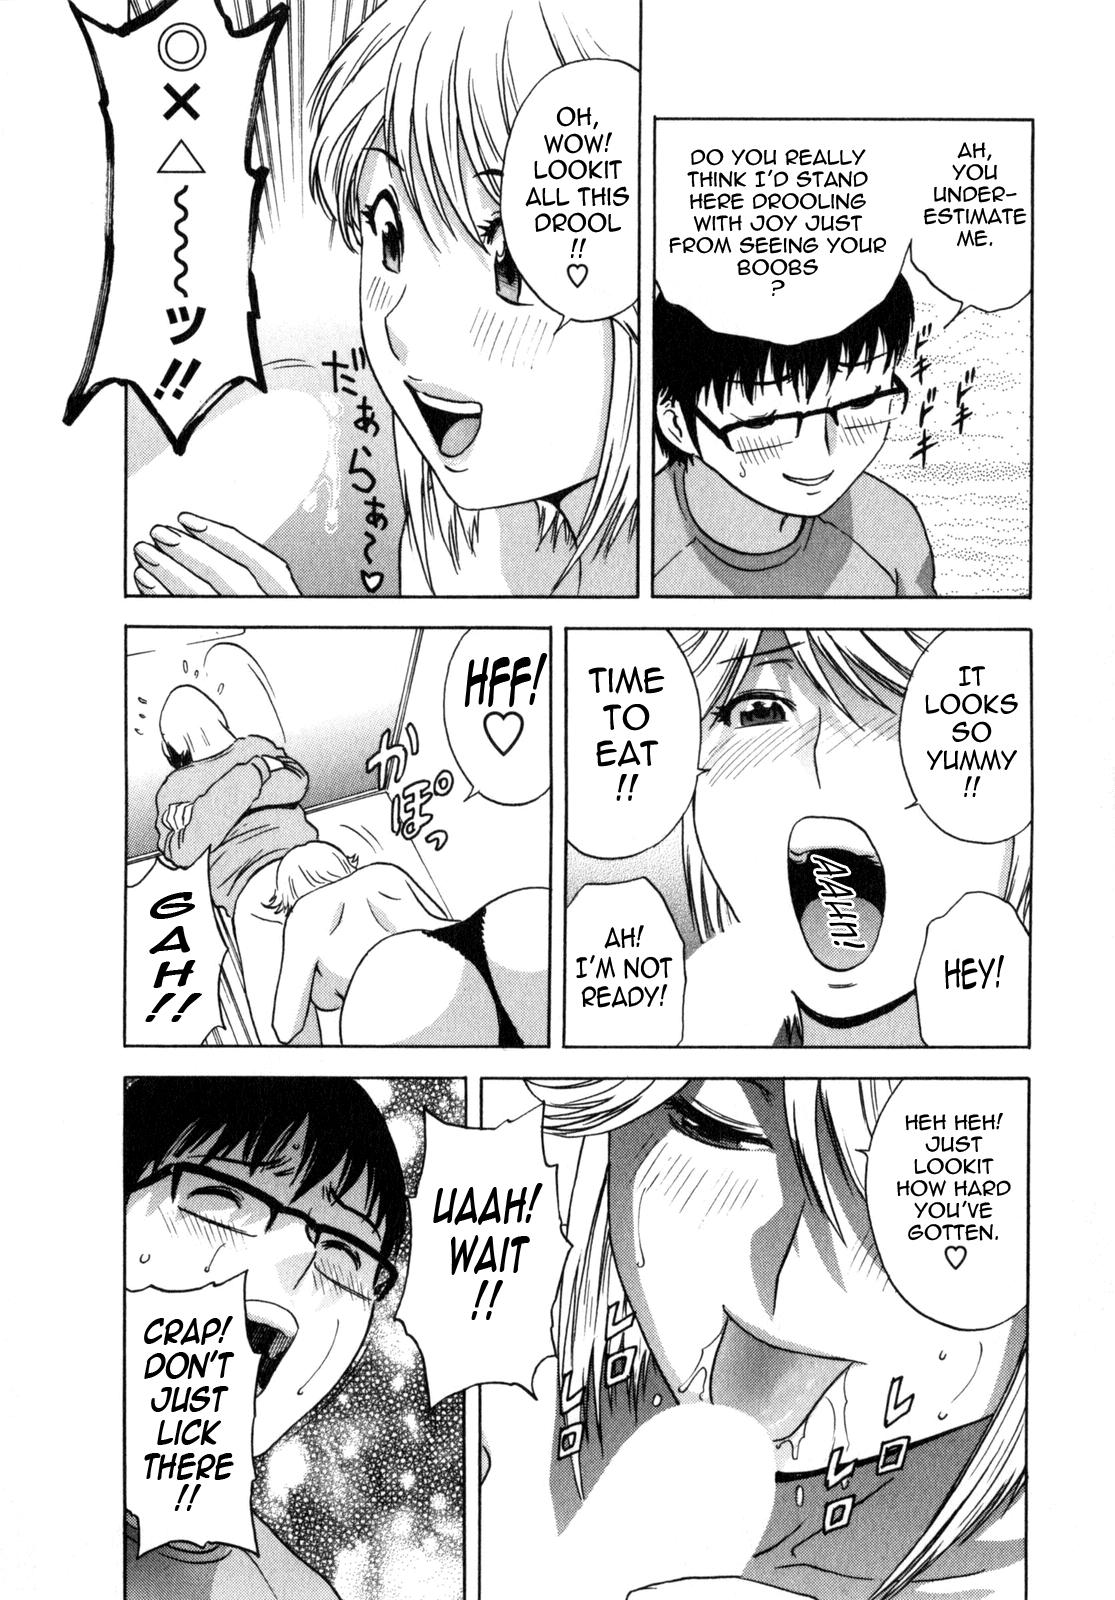 [Hidemaru] Life with Married Women Just Like a Manga 1 - Ch. 1-7 [English] {Tadanohito} 33